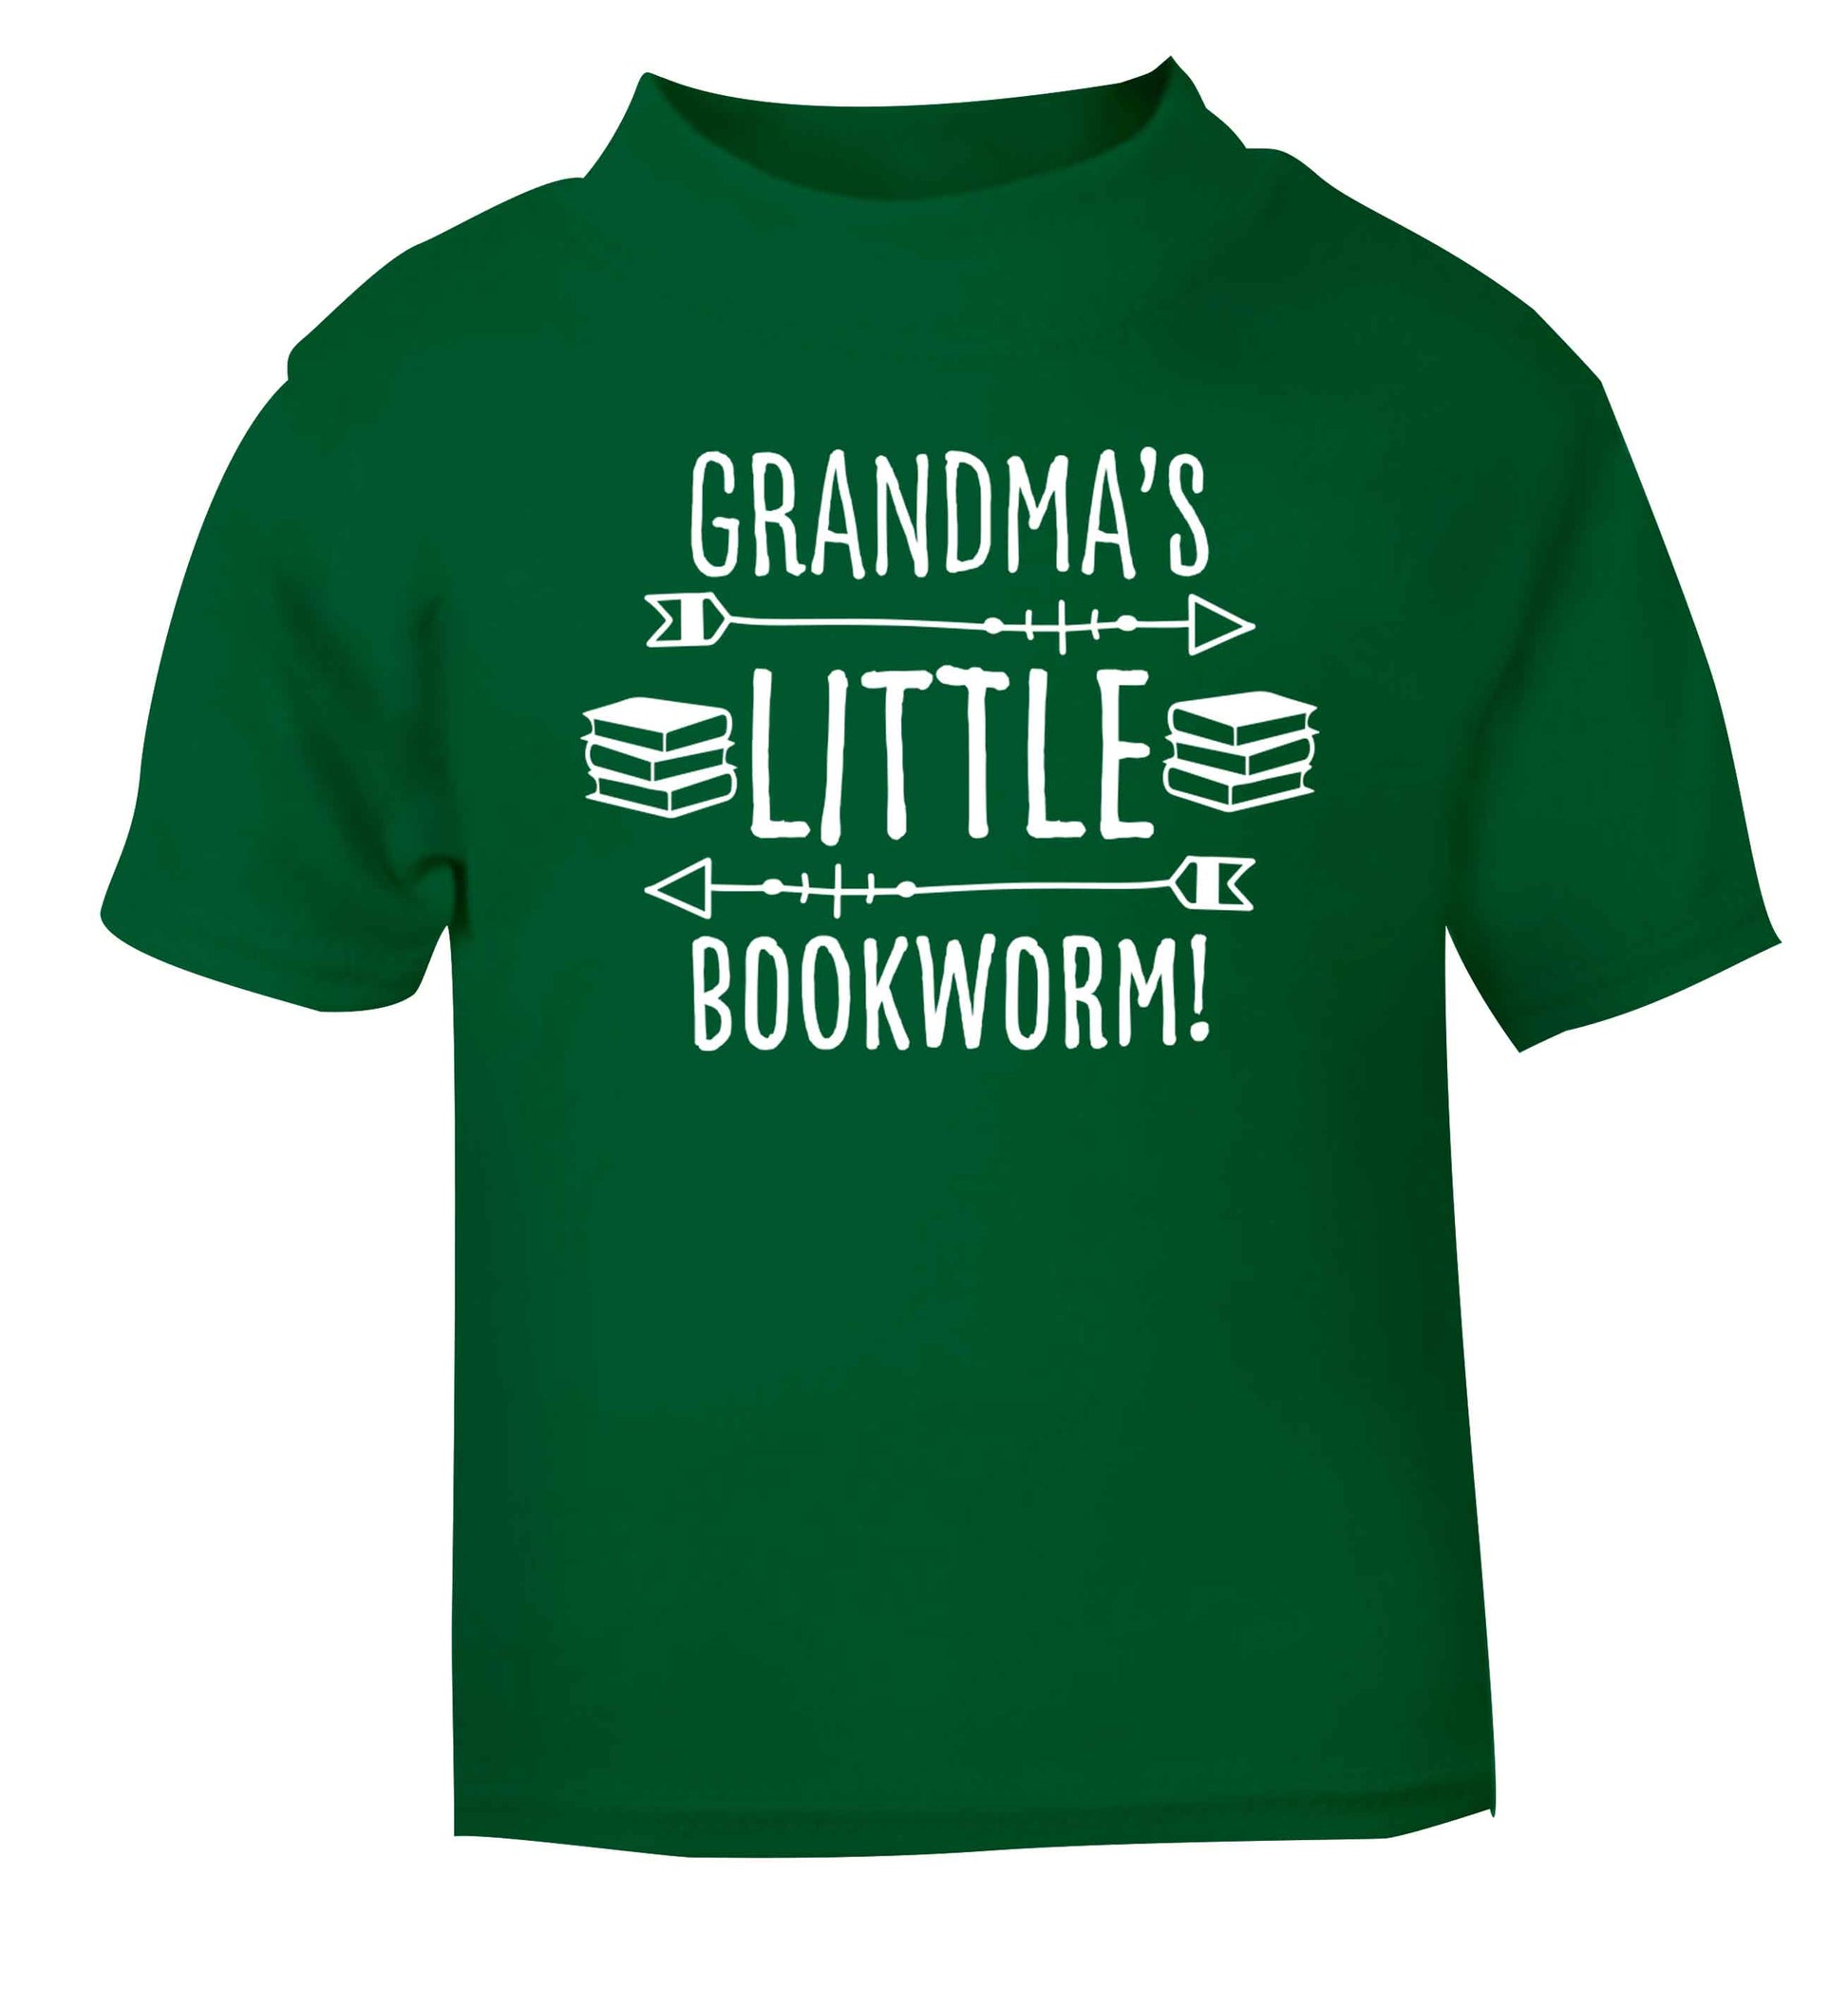 Grandma's little bookworm green baby toddler Tshirt 2 Years